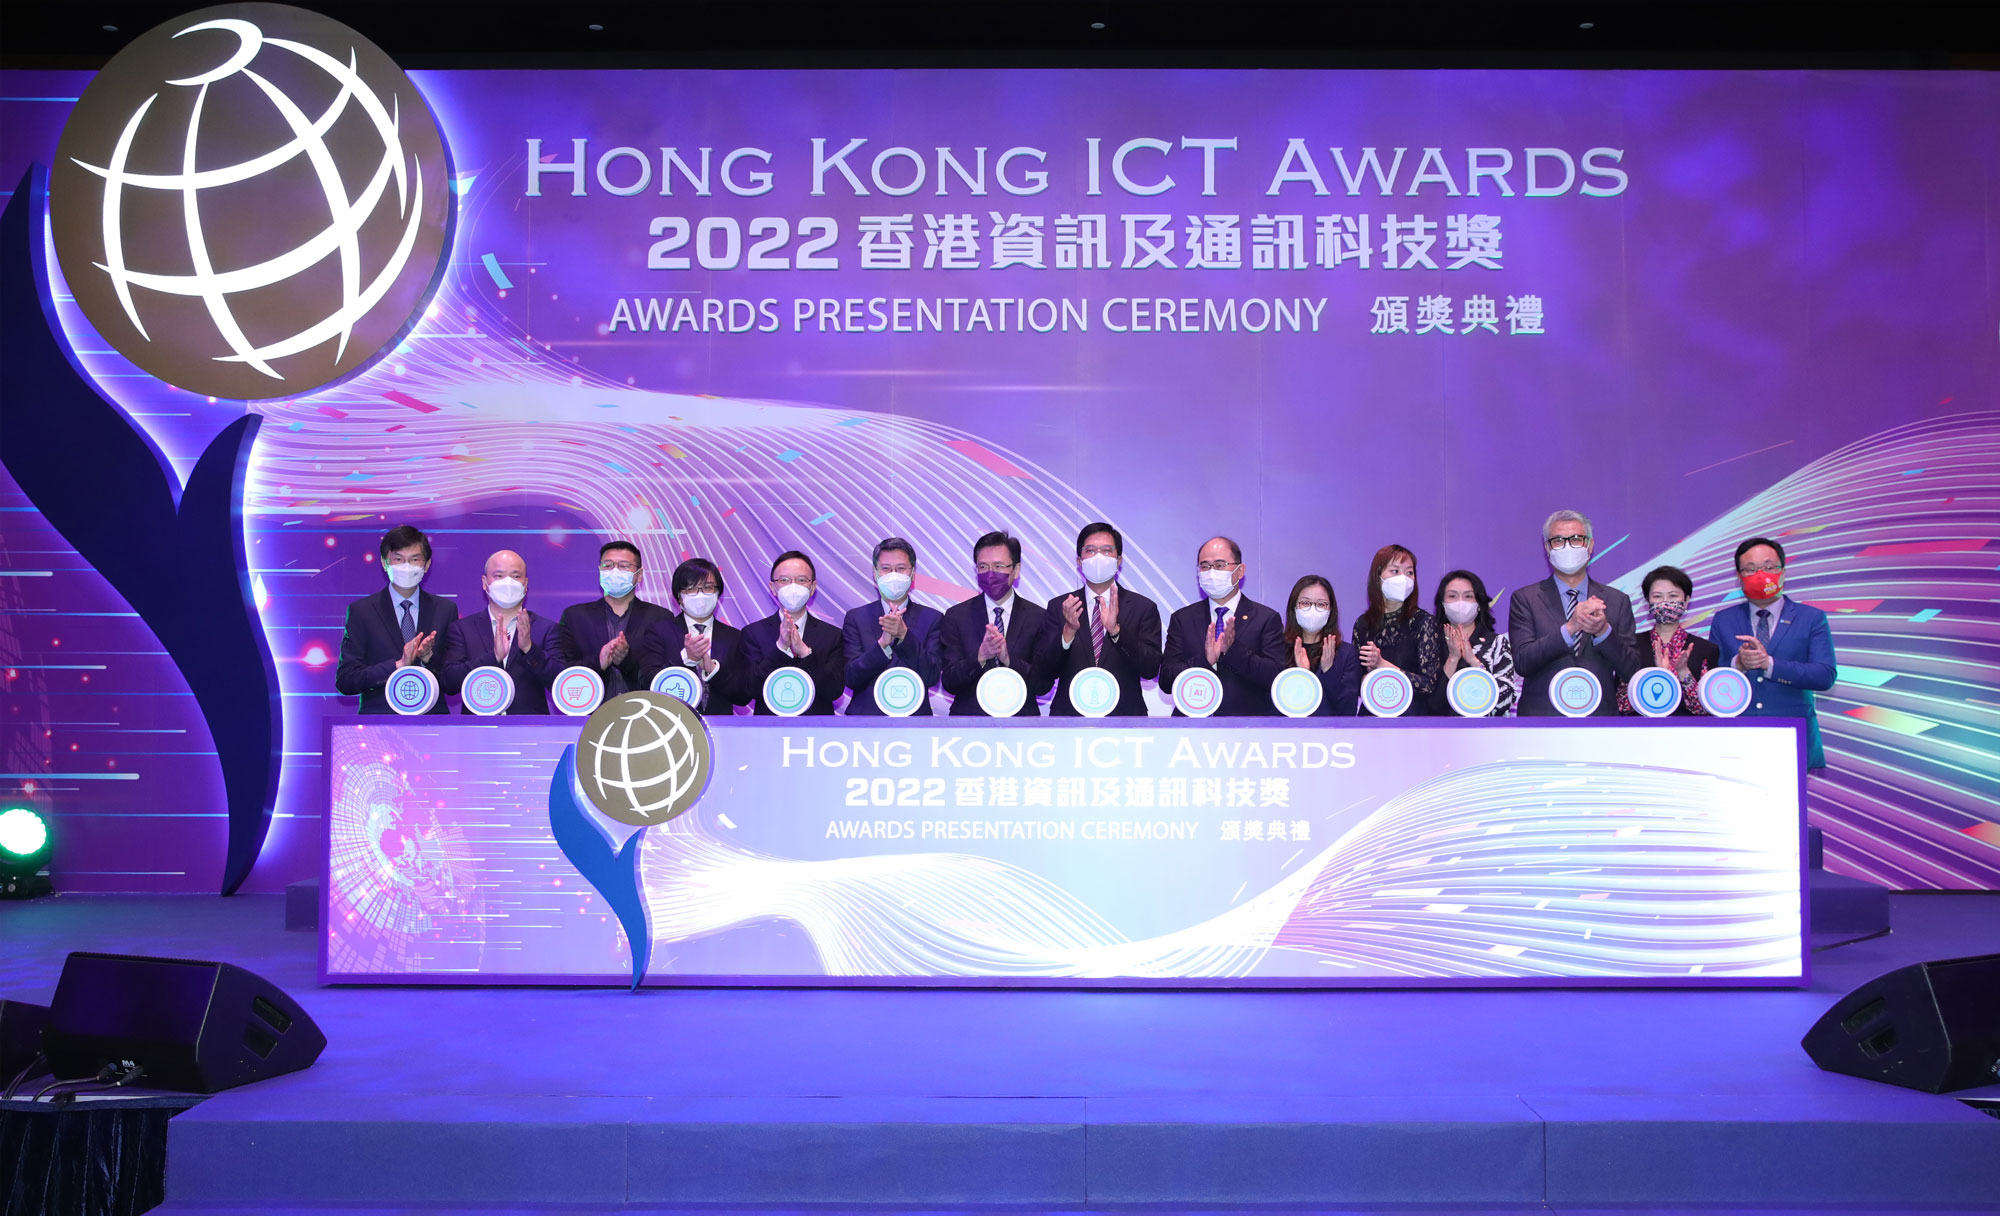 Hong Kong ICT Awards 2022